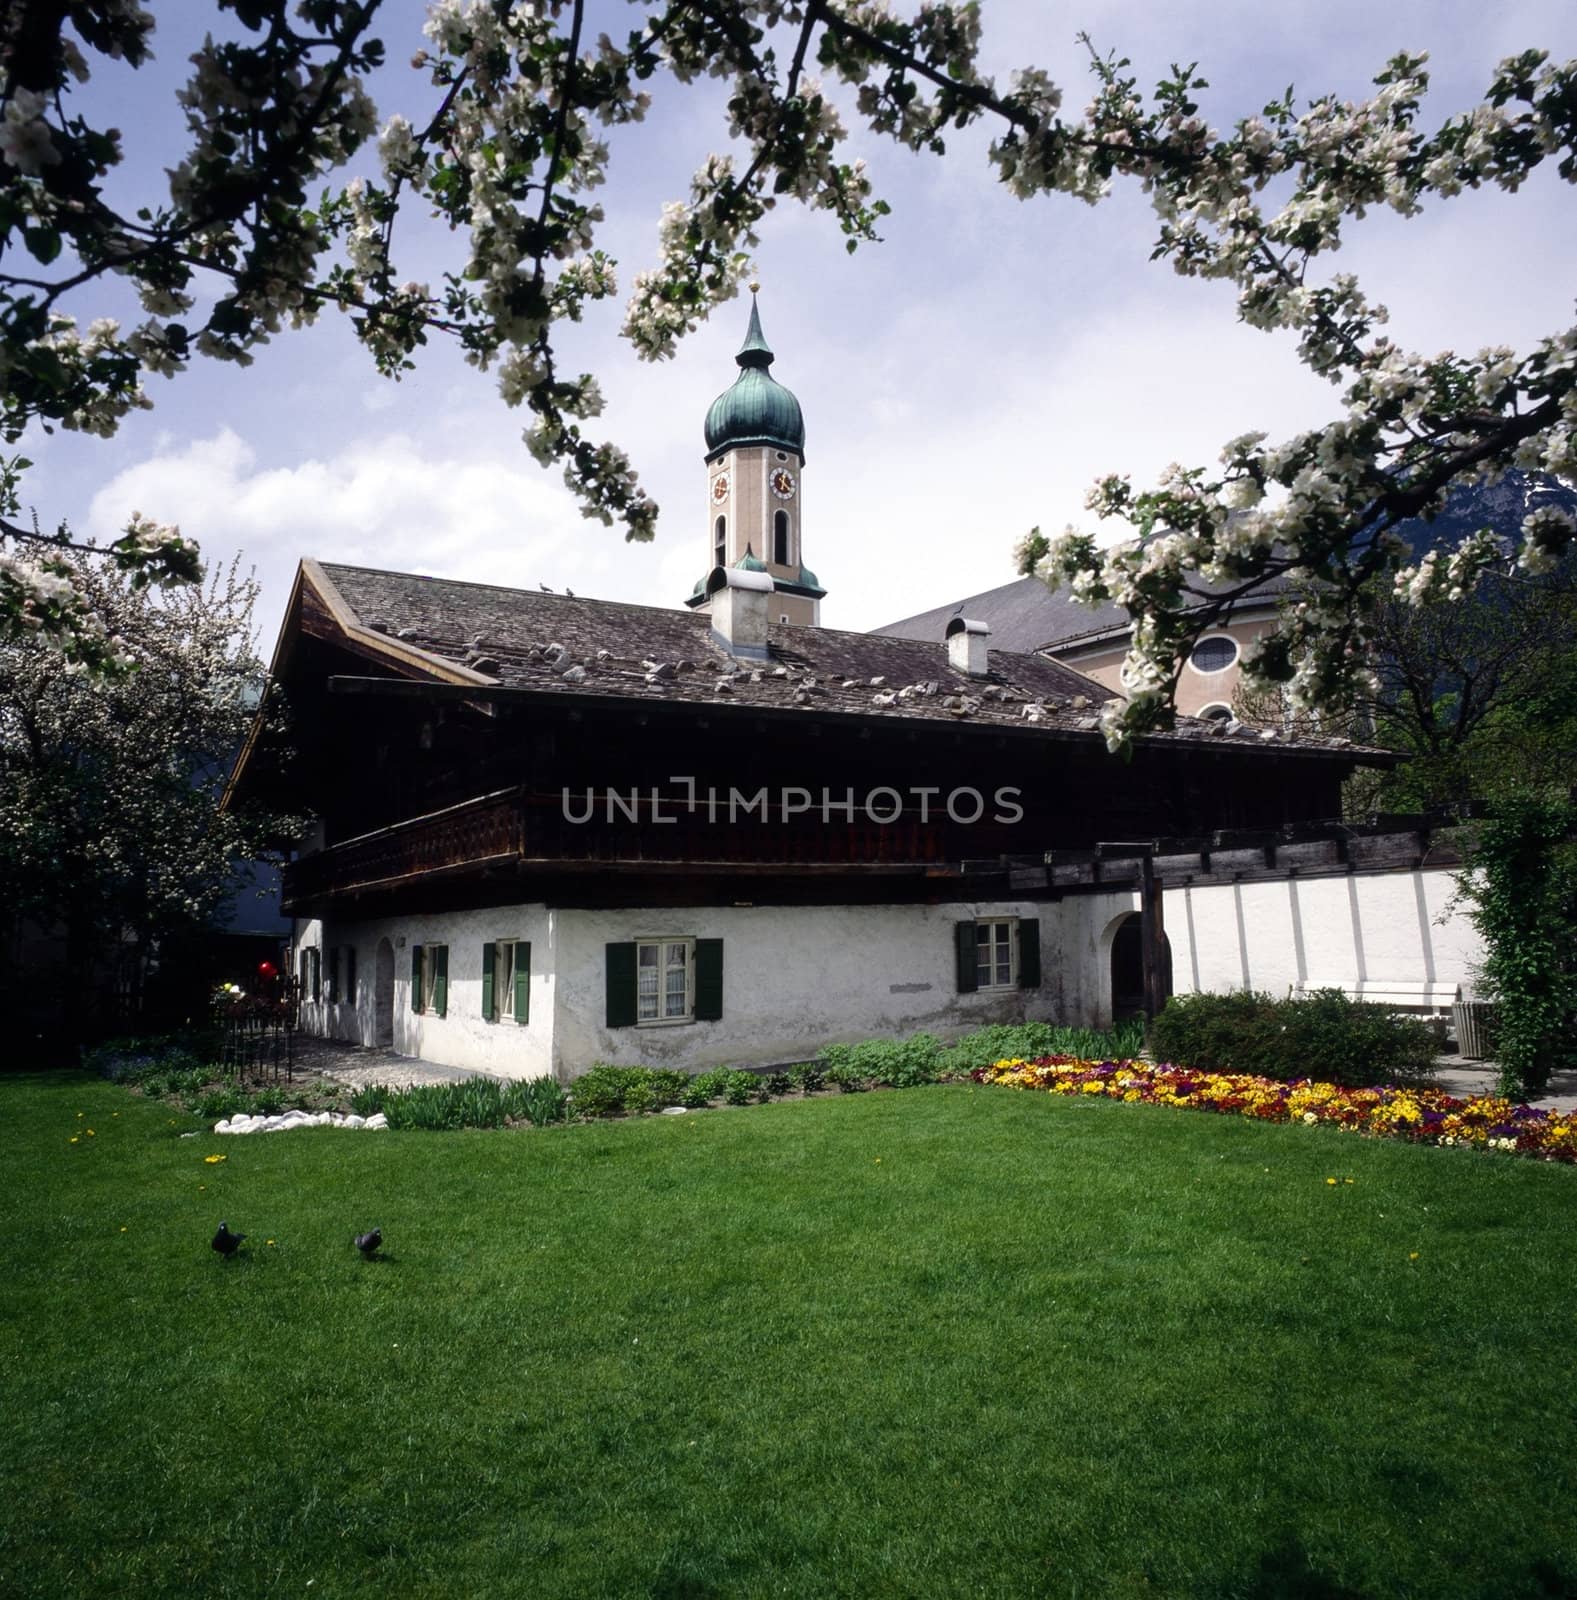 Farm house, Garmisch-Partenkirchen, Germany by jol66